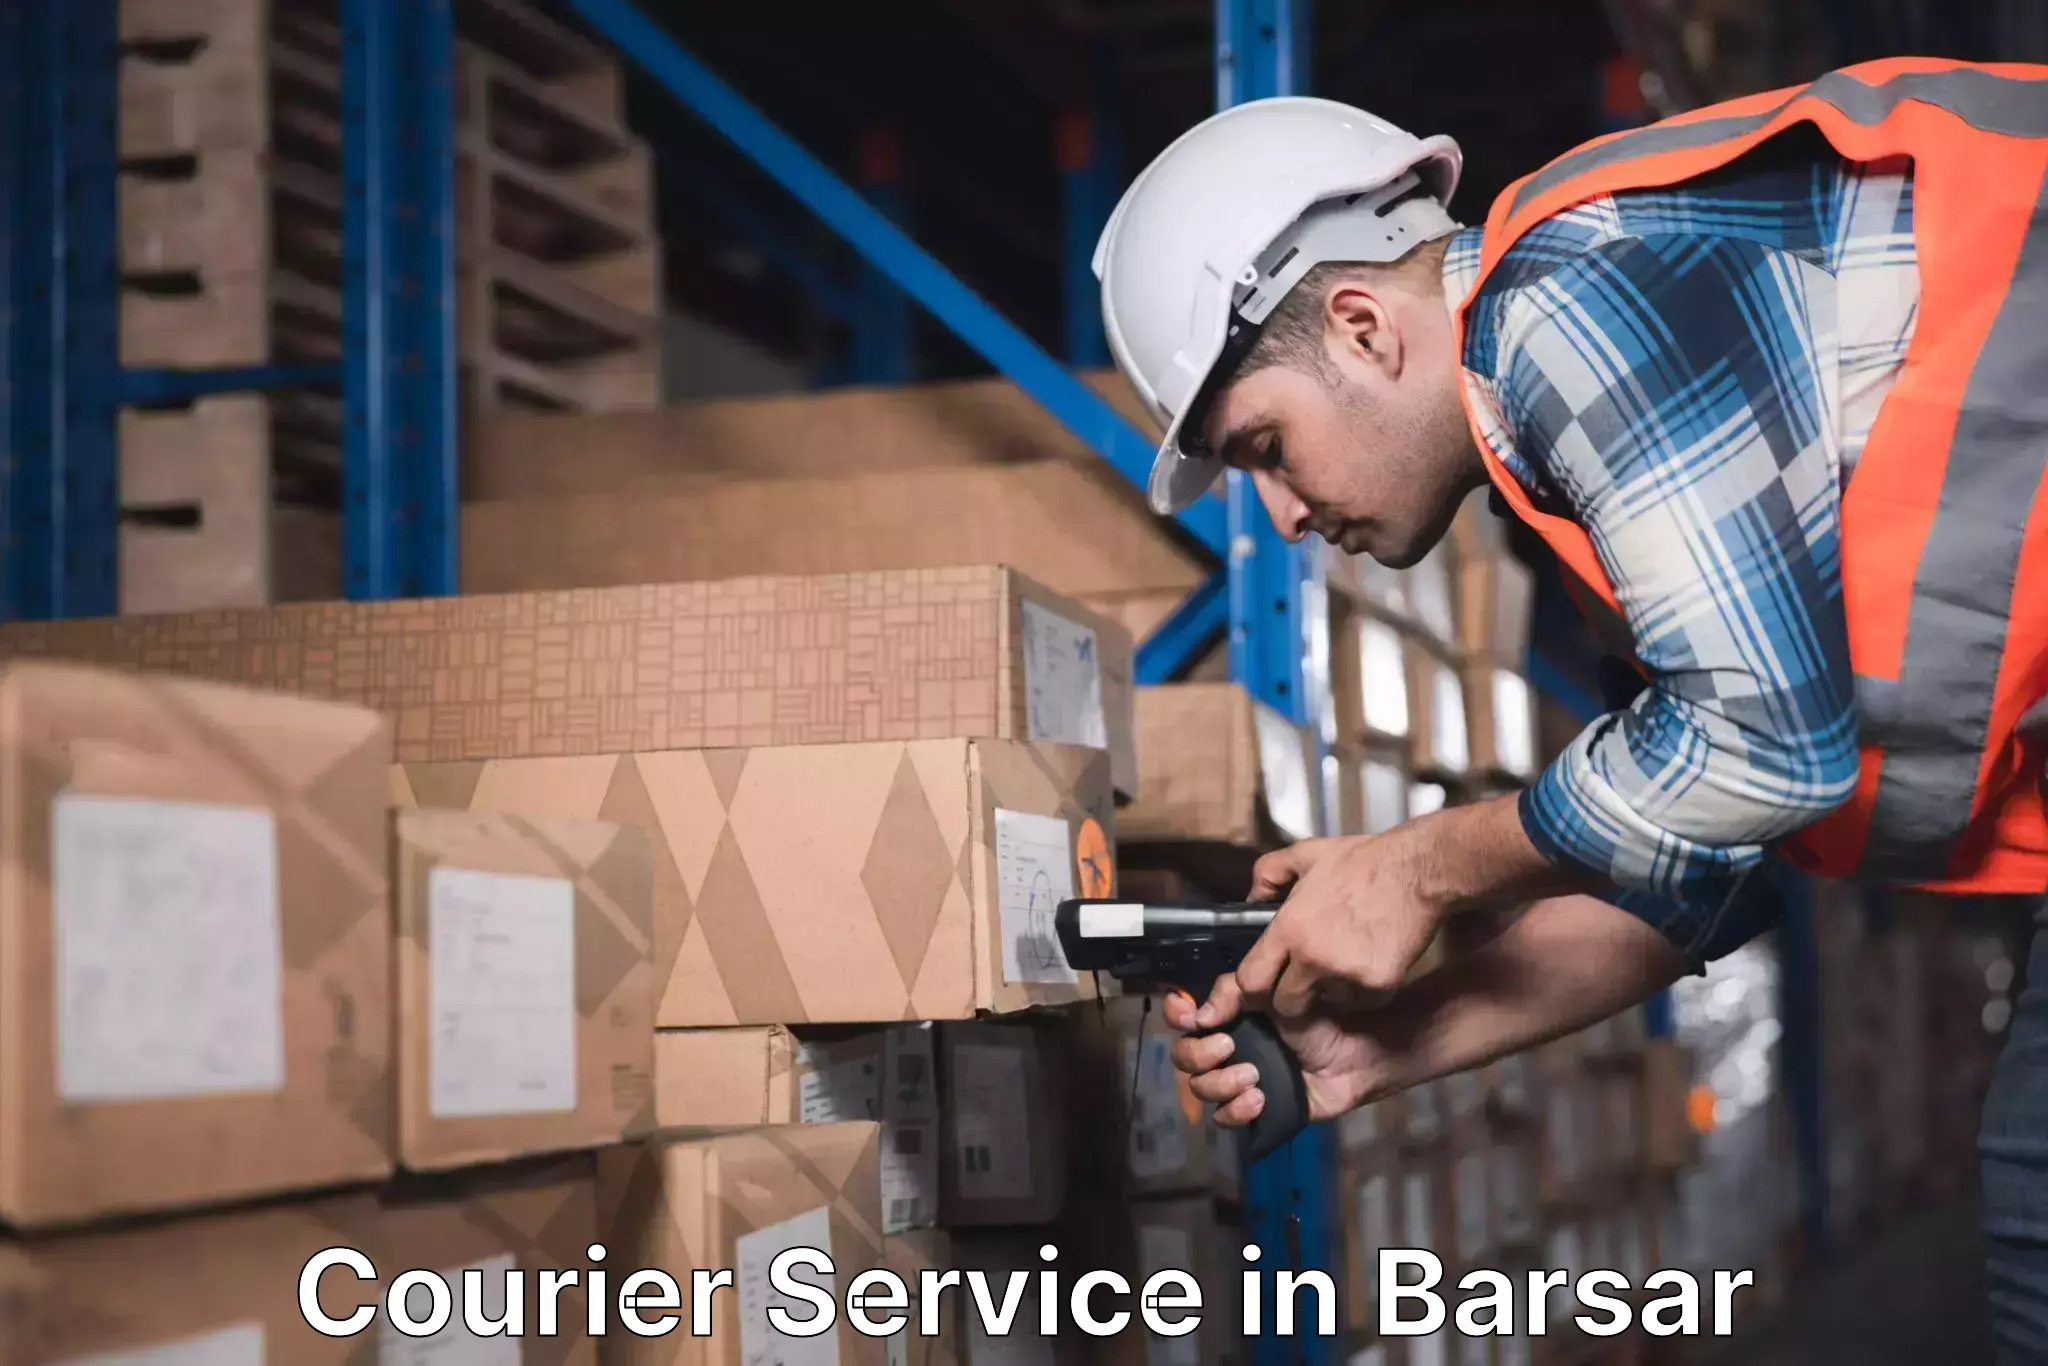 Multi-service courier options in Barsar